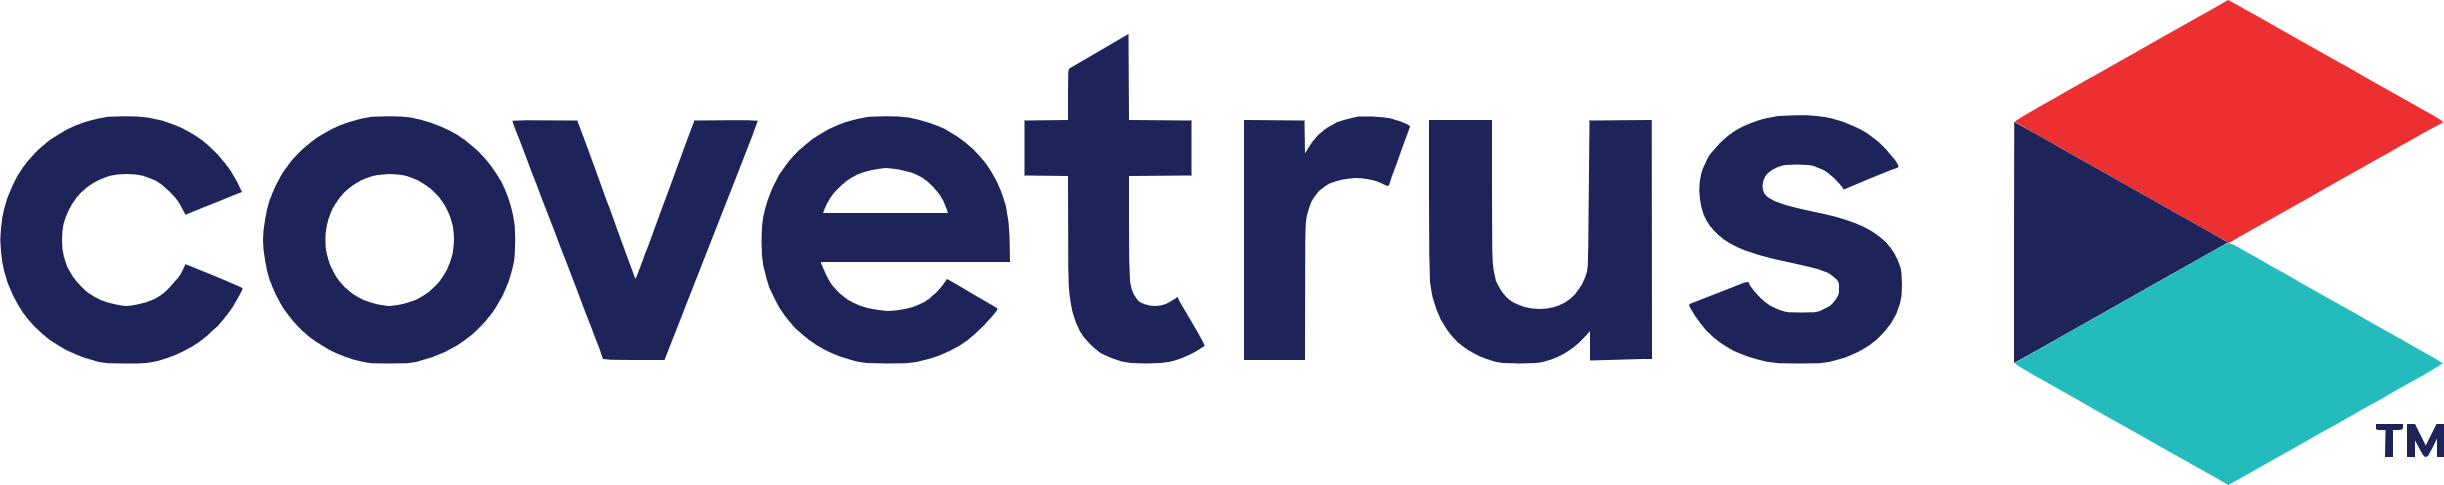 Covetrus
 logo large (transparent PNG)